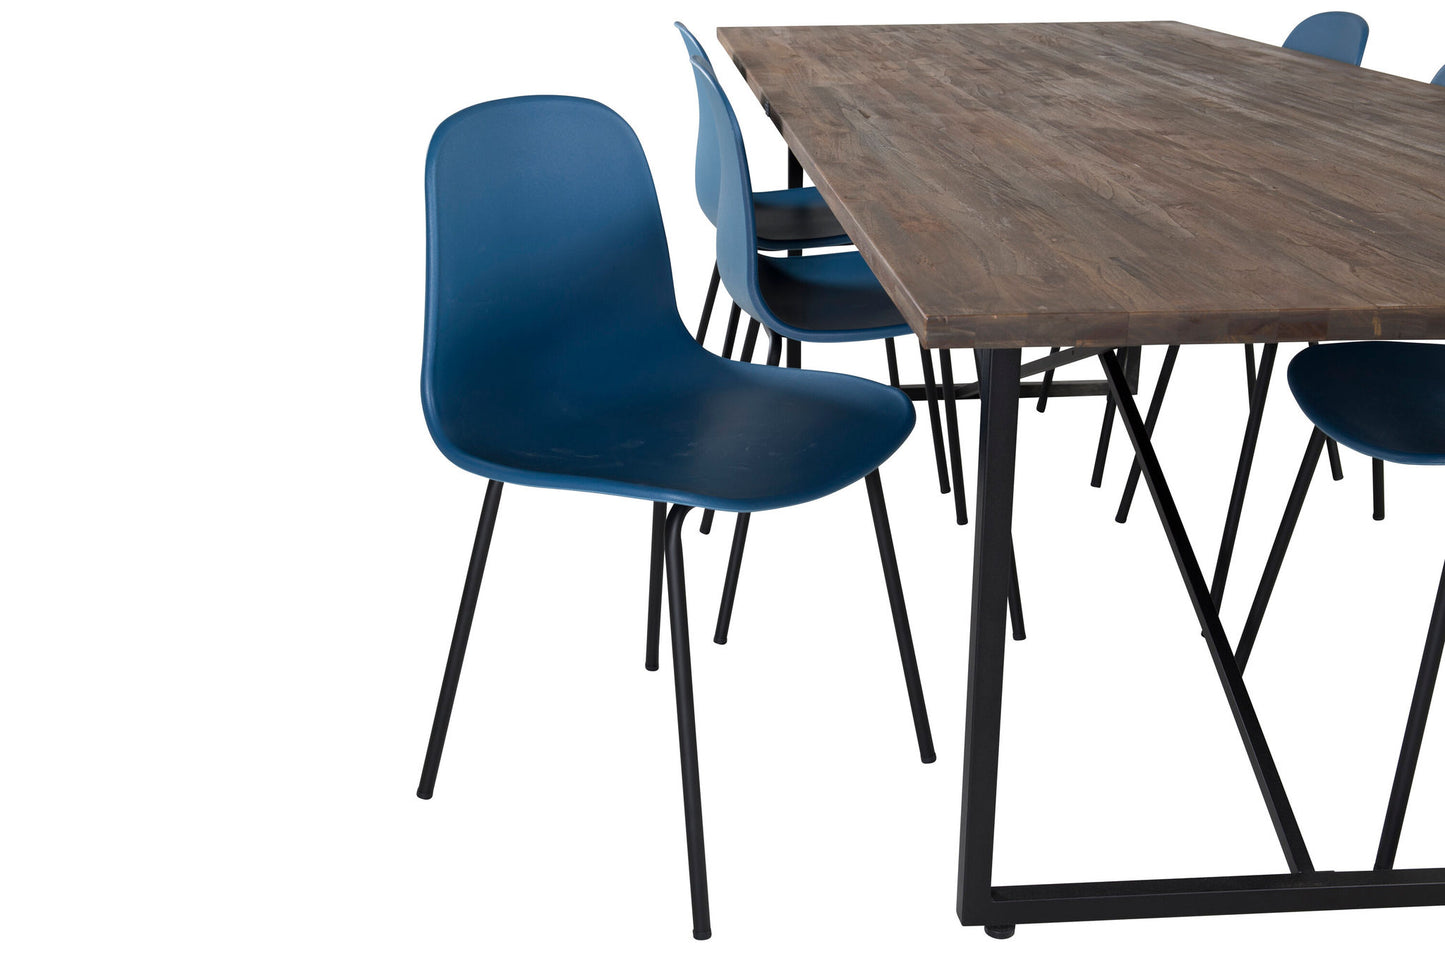 Padang - Spisebord, 250*100*H76 - Mørk Teak / Sort+Arctic Spisebordsstol - Sorte ben - Blå Plast